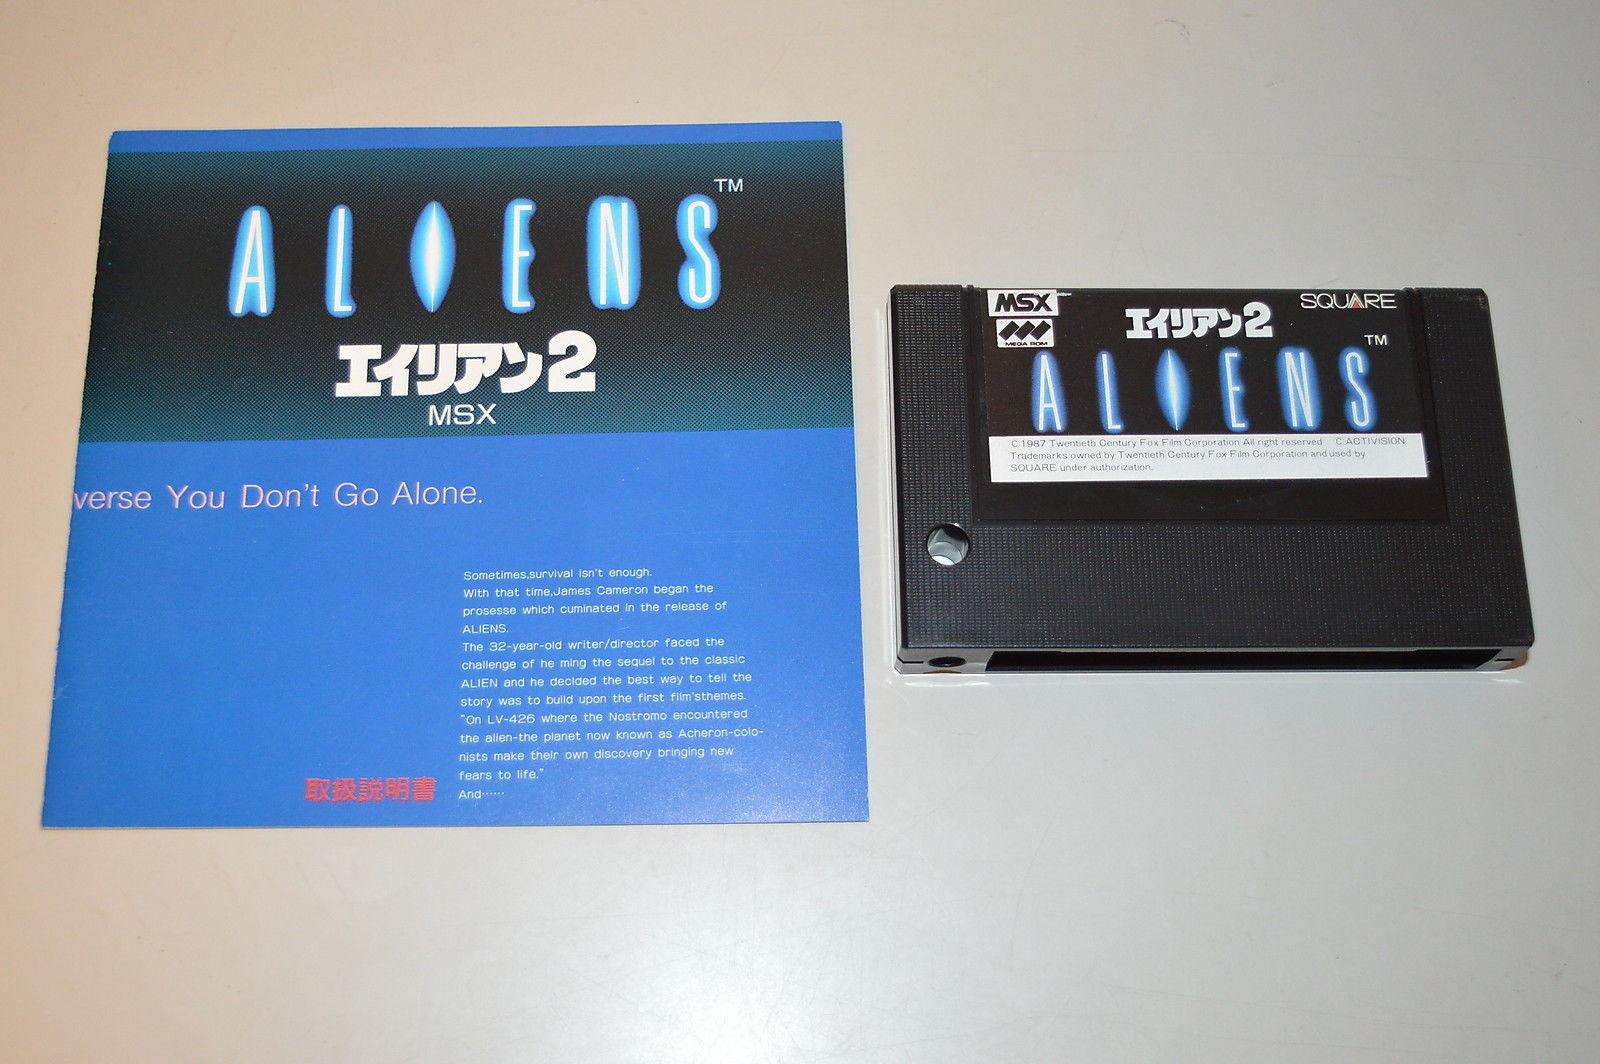 Aliens: Alien 2 (1987, MSX, Square) | Releases | Generation MSX